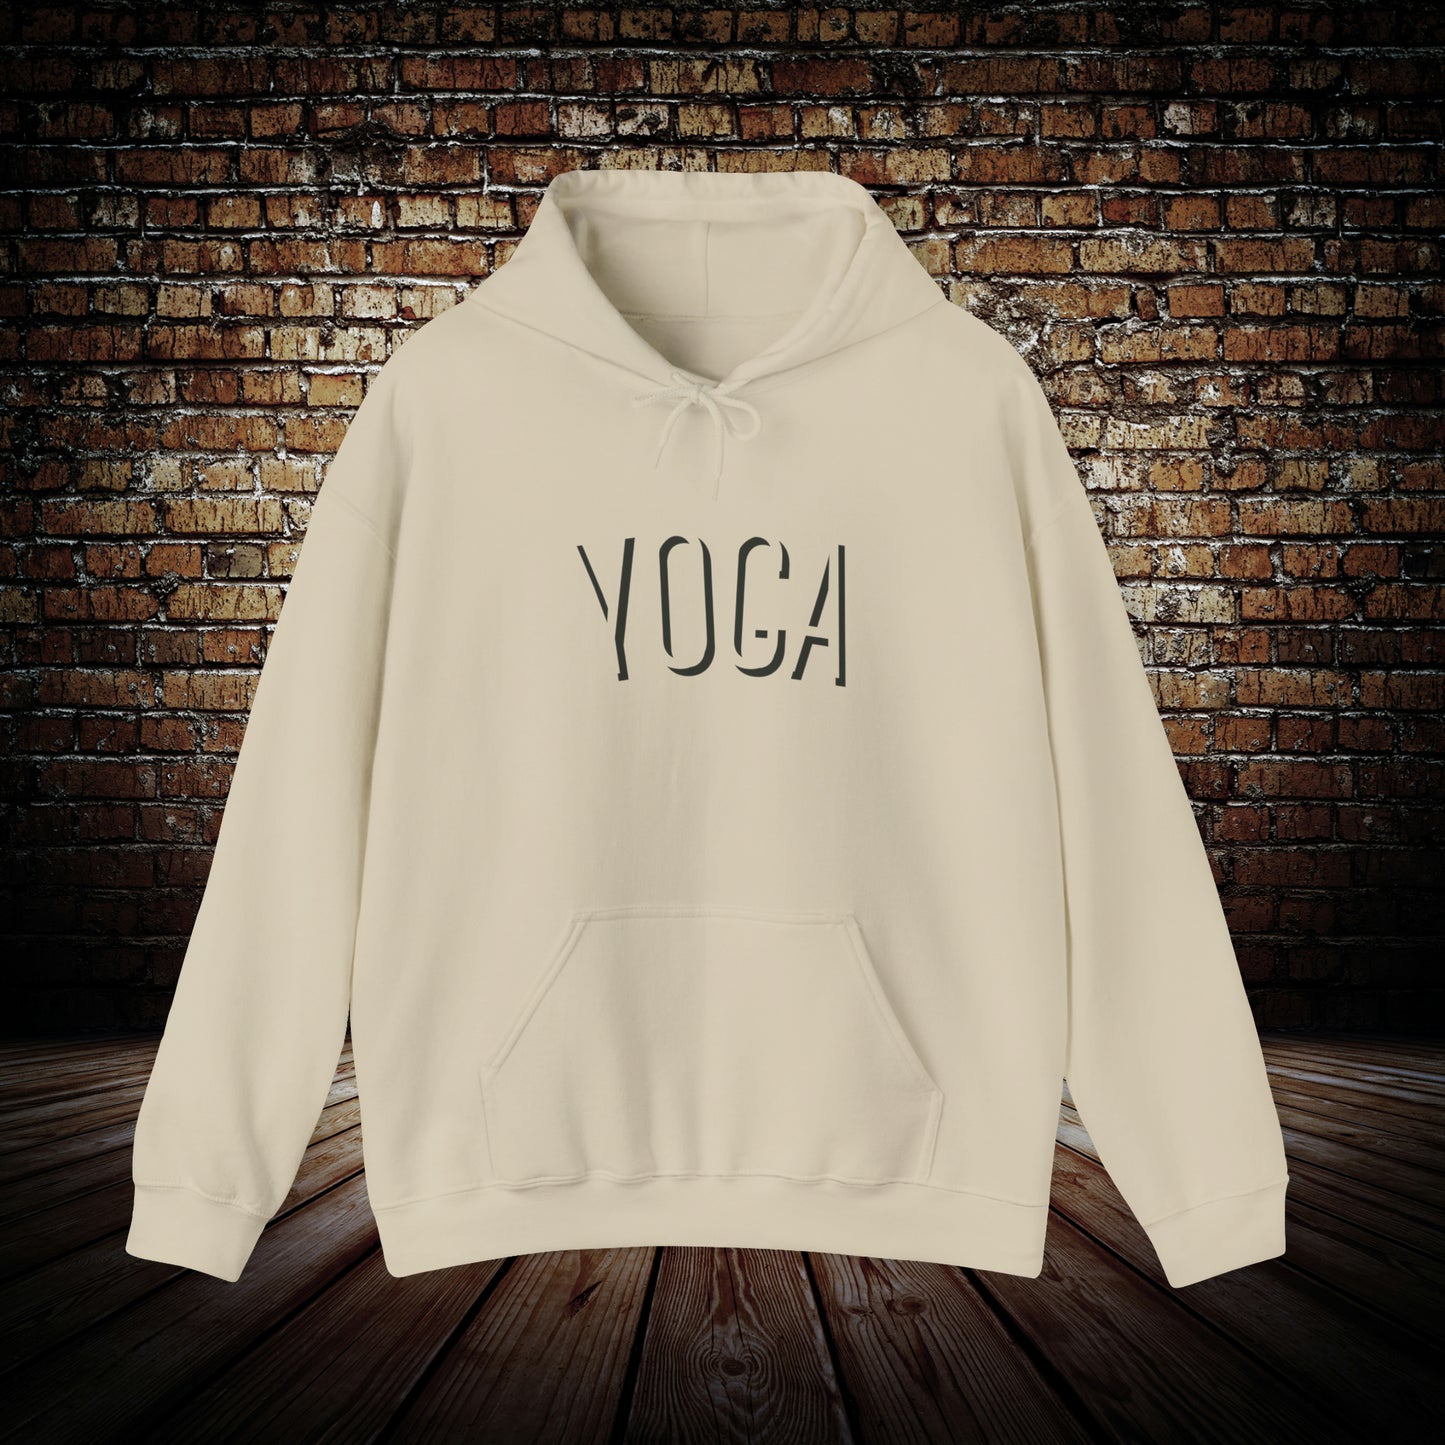 YOGA - Yoga Inspired Hoodie